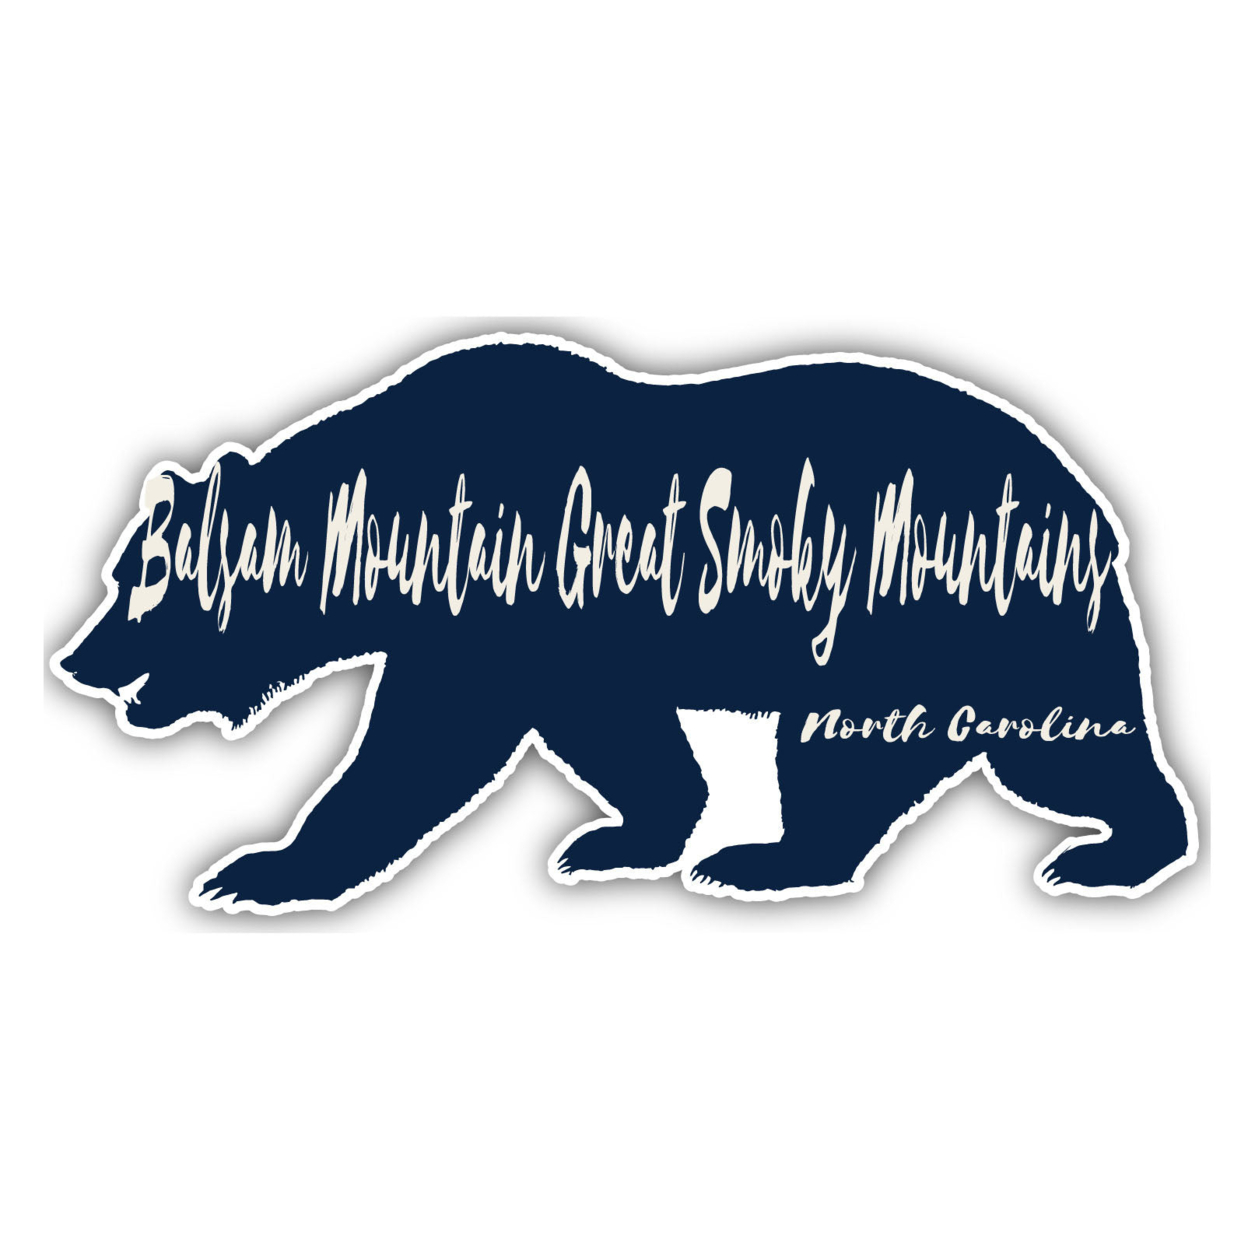 Balsam Mountain Great Smoky Mountains North Carolina Souvenir Decorative Stickers (Choose Theme And Size) - Single Unit, 12-Inch, Bear